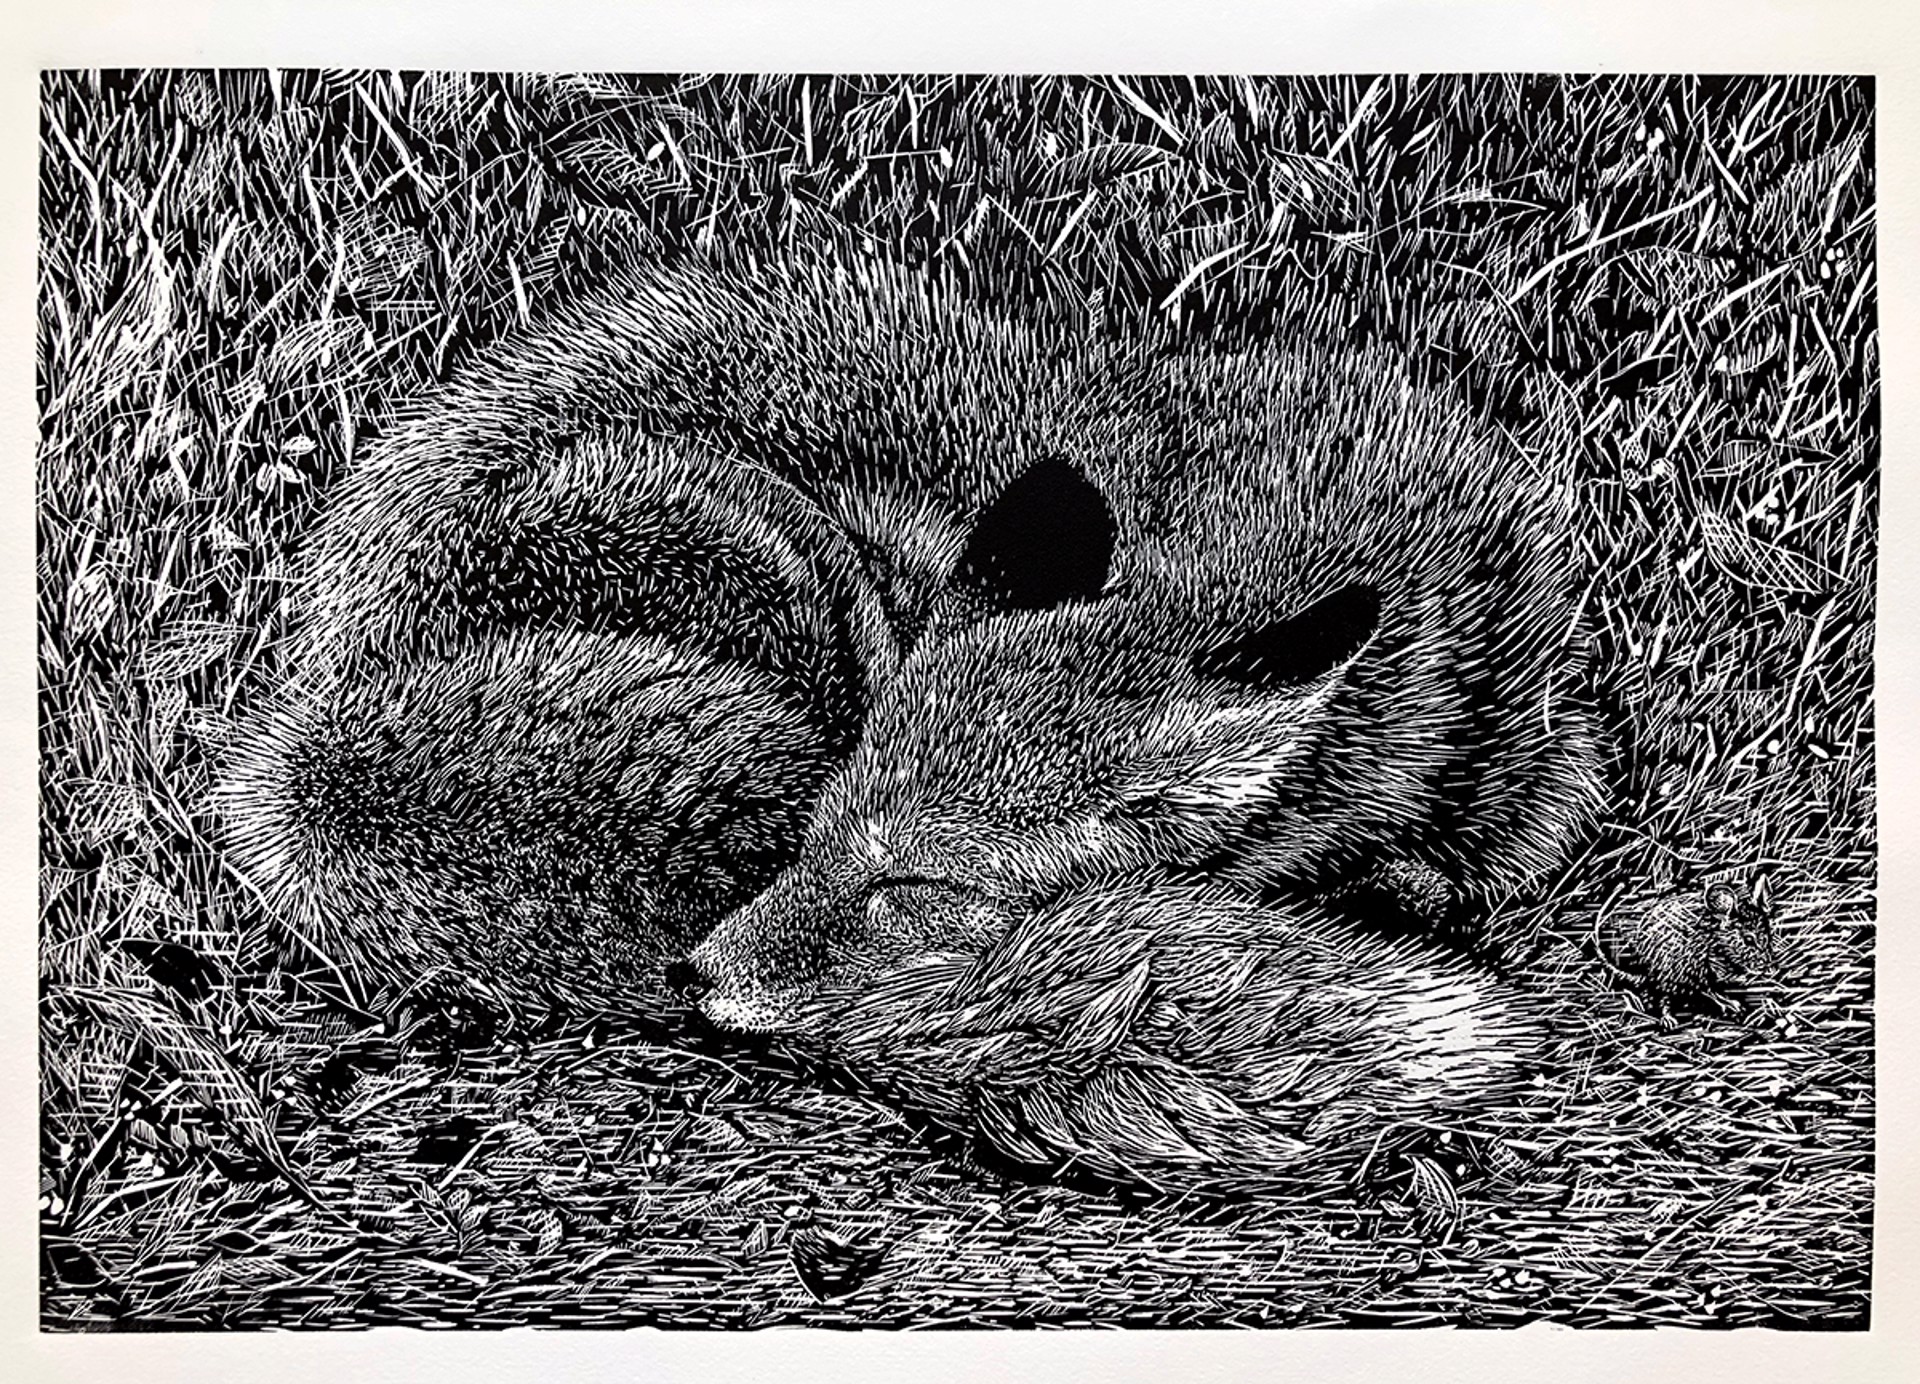 Sleeping Fox by Marit Berg